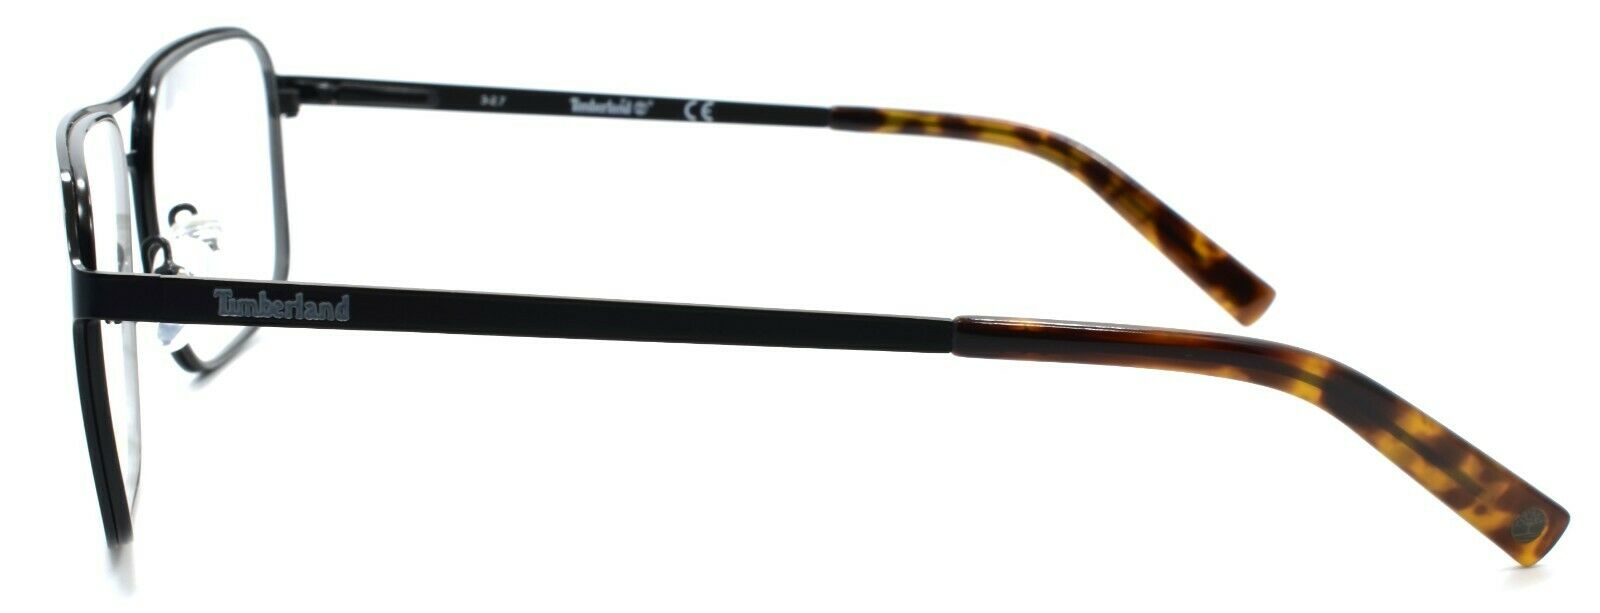 3-TIMBERLAND TB1593 002 Men's Eyeglasses Frames Aviator 58-17-150 Matte Black-664689979745-IKSpecs